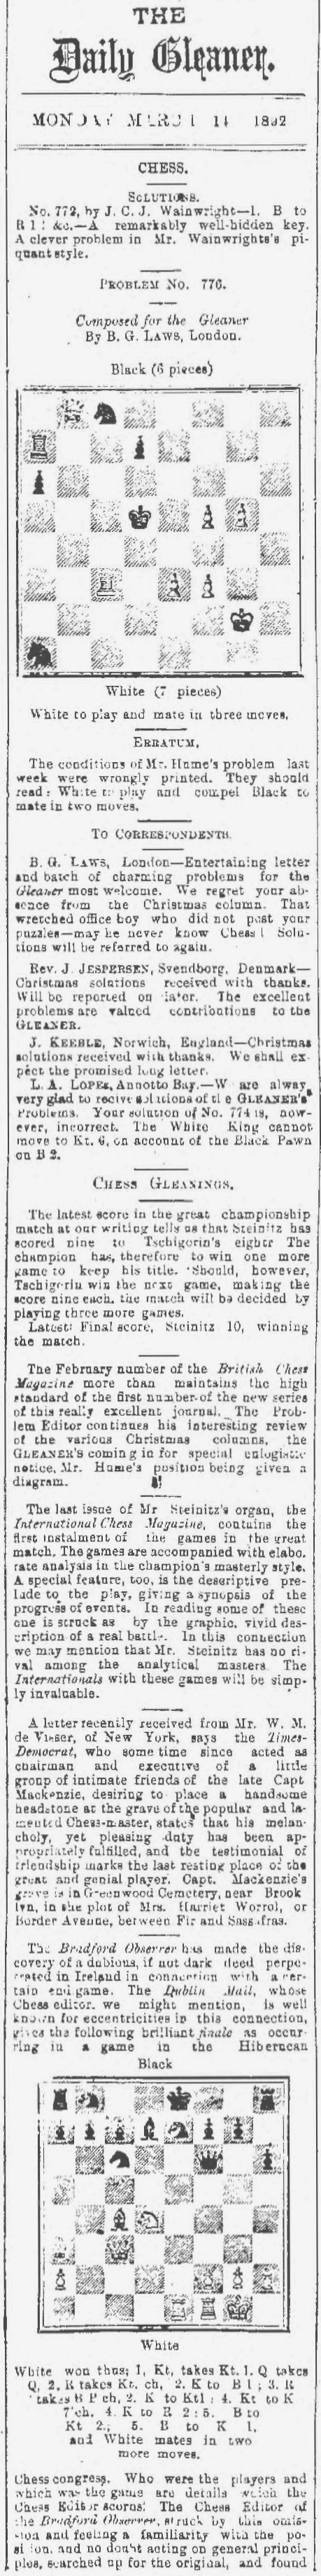 1892.03.14-01 Kingston Daily Gleaner.png